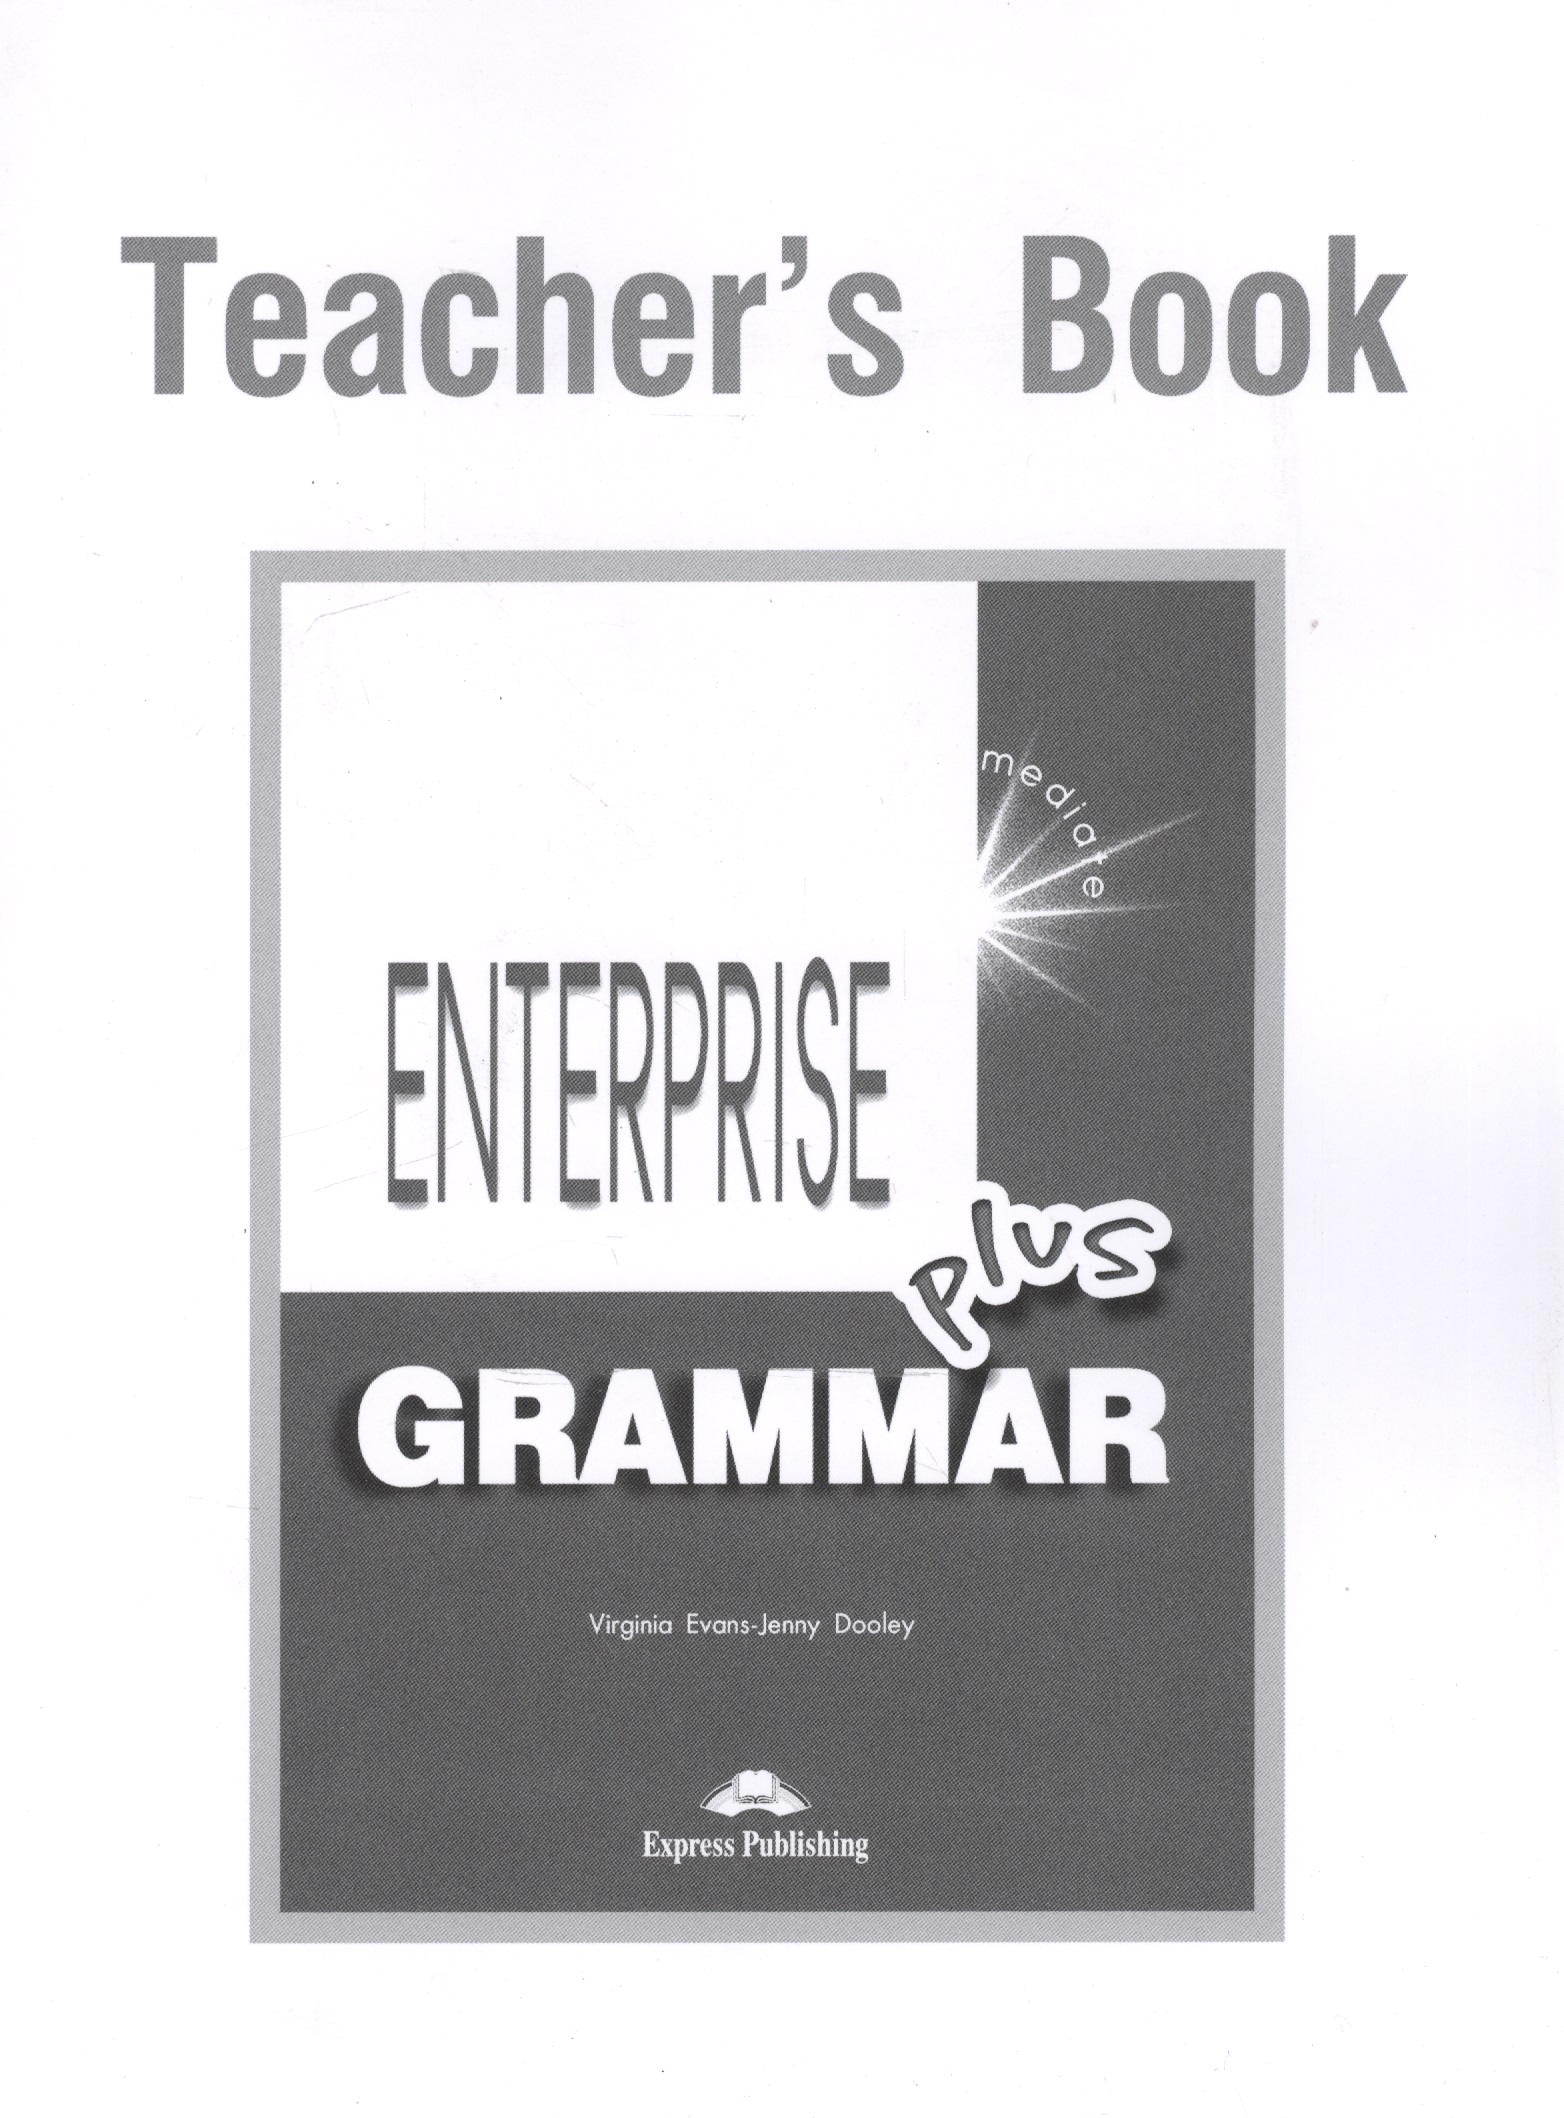 Enterprise grammar books